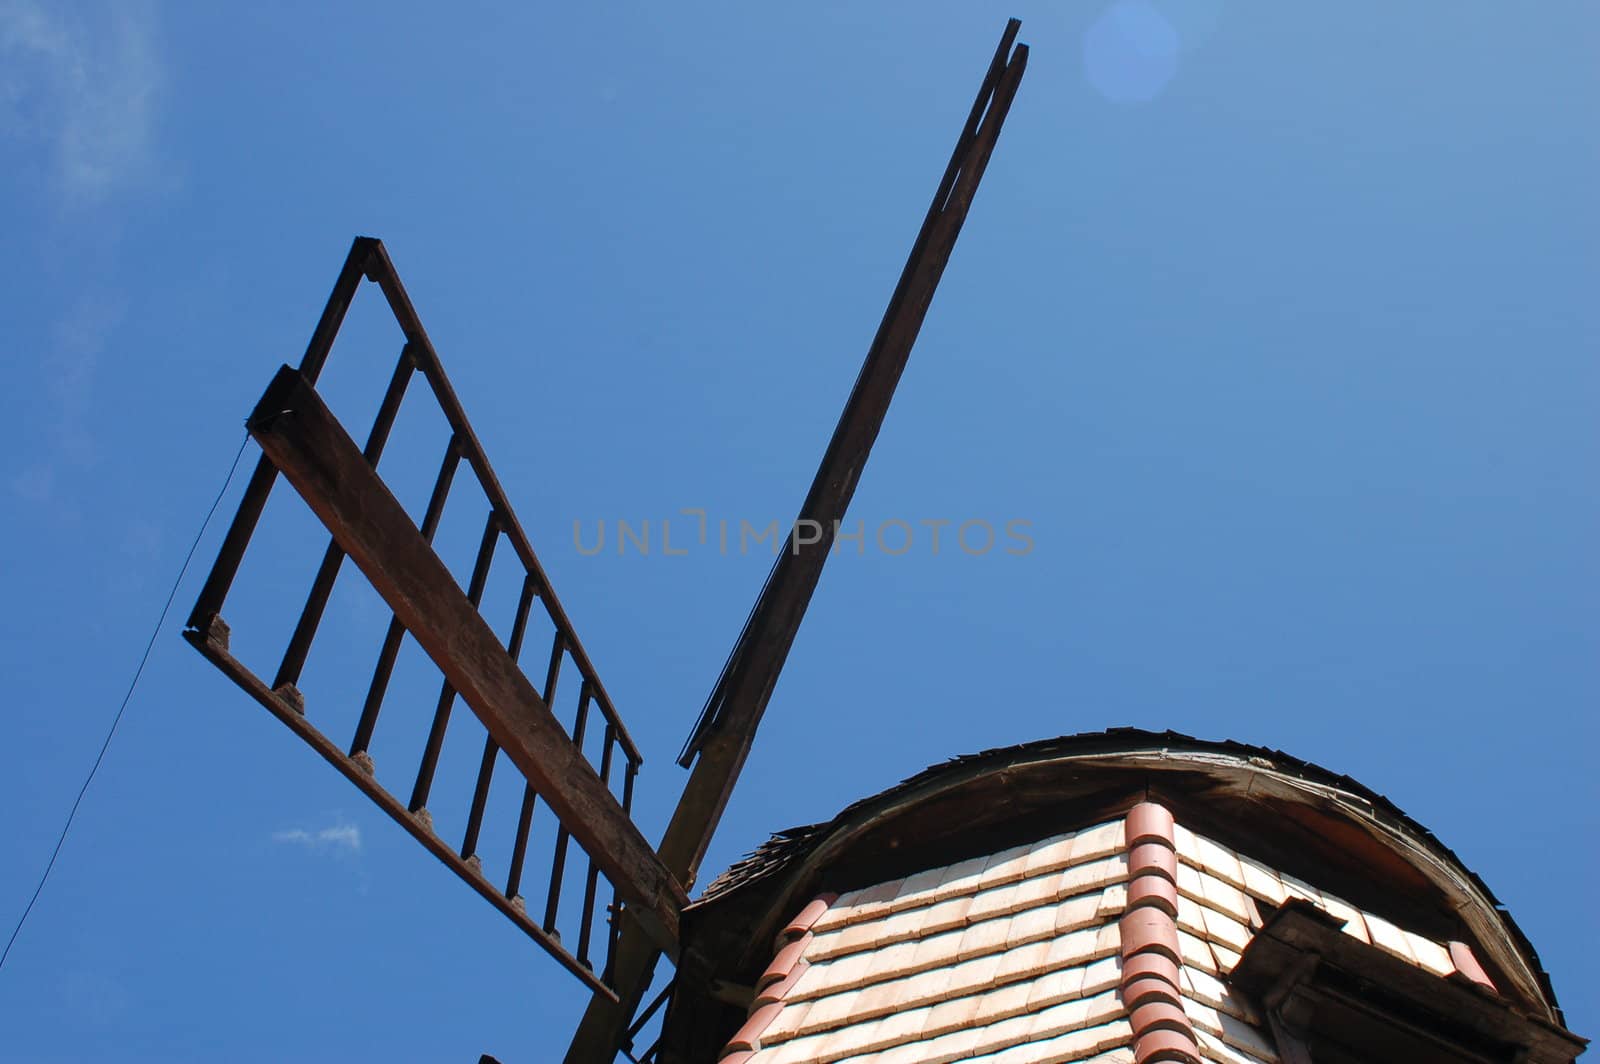 Windmill Blades Against Blue Sky by PrincessToula